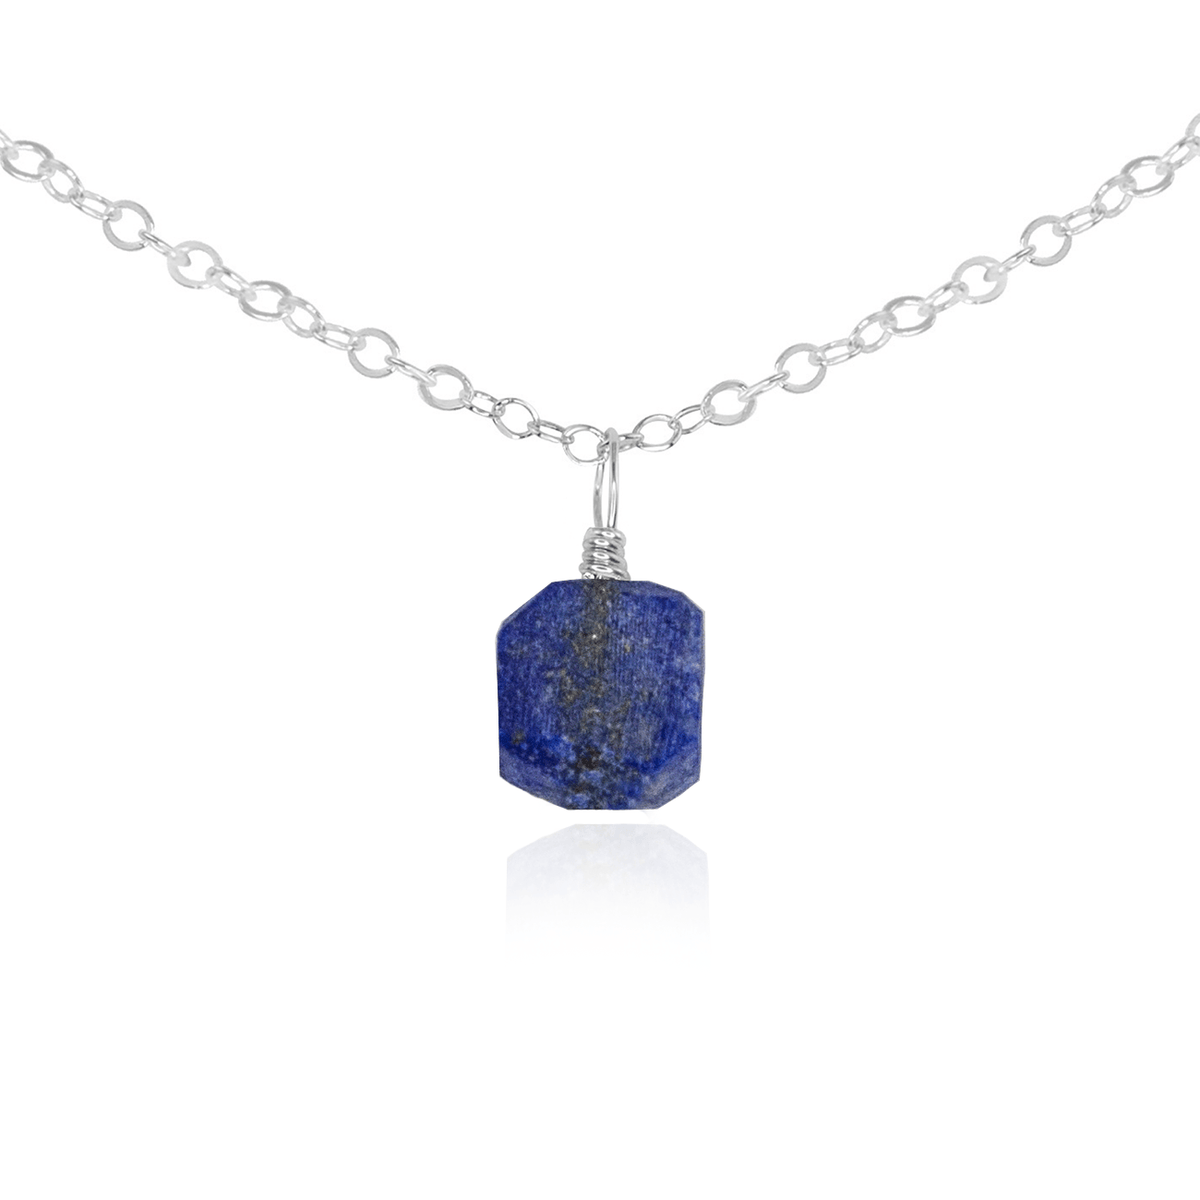 Tiny Rough Lapis Lazuli Gemstone Pendant Choker - Tiny Rough Lapis Lazuli Gemstone Pendant Choker - Sterling Silver / Cable - Luna Tide Handmade Crystal Jewellery